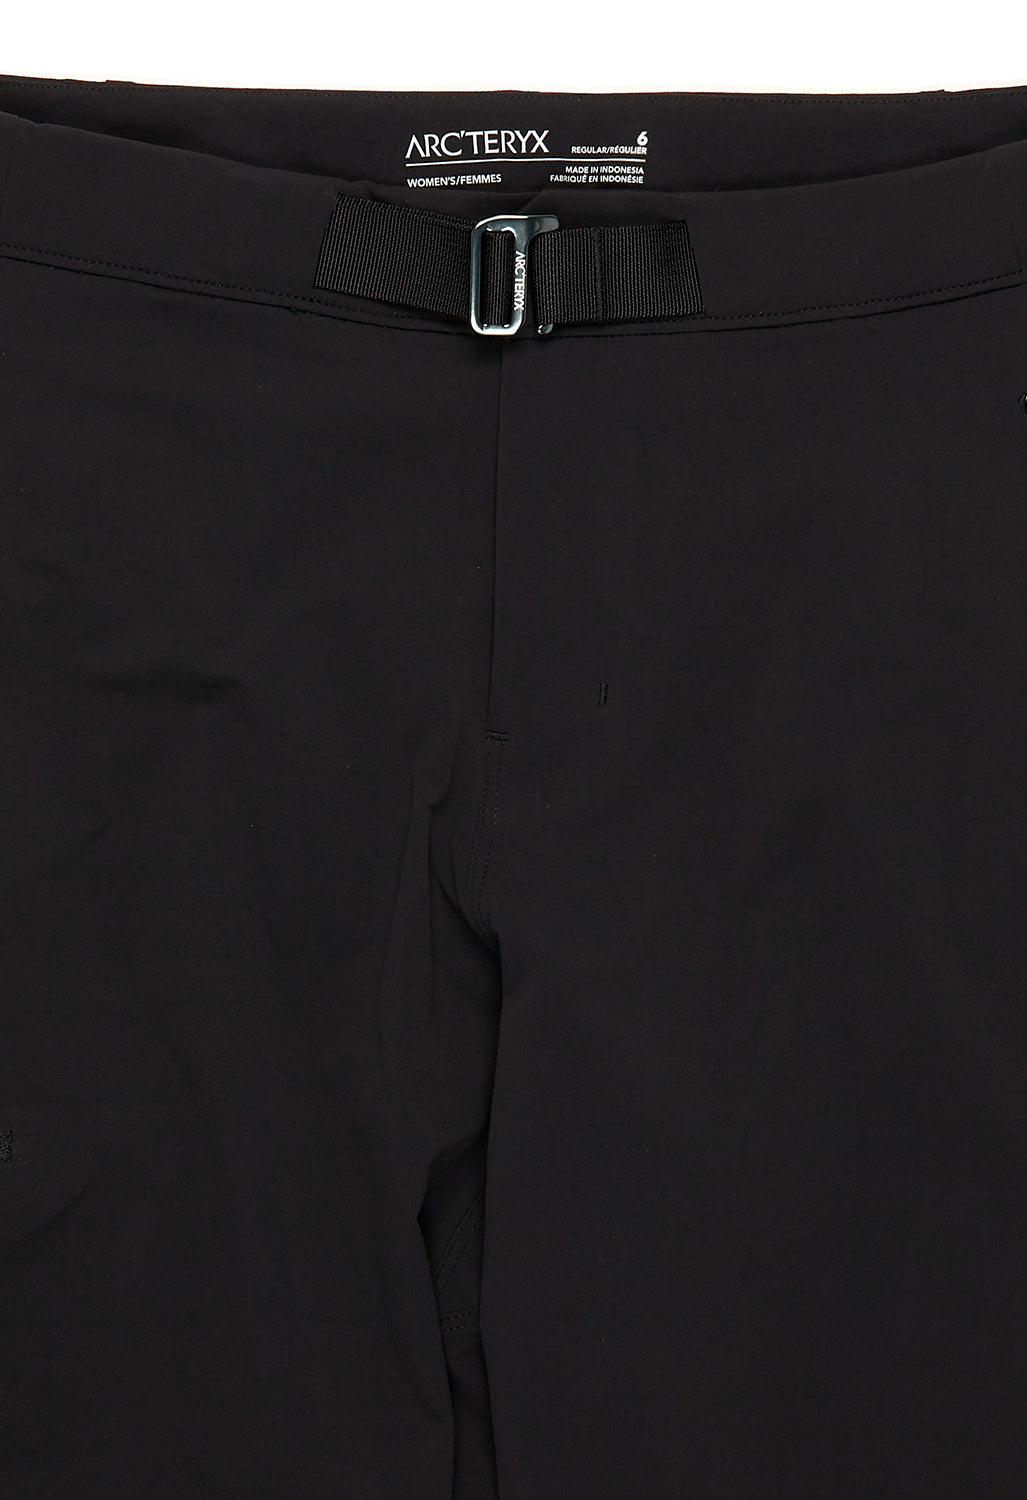 Arc'teryx Women's Gamma Pant - Black